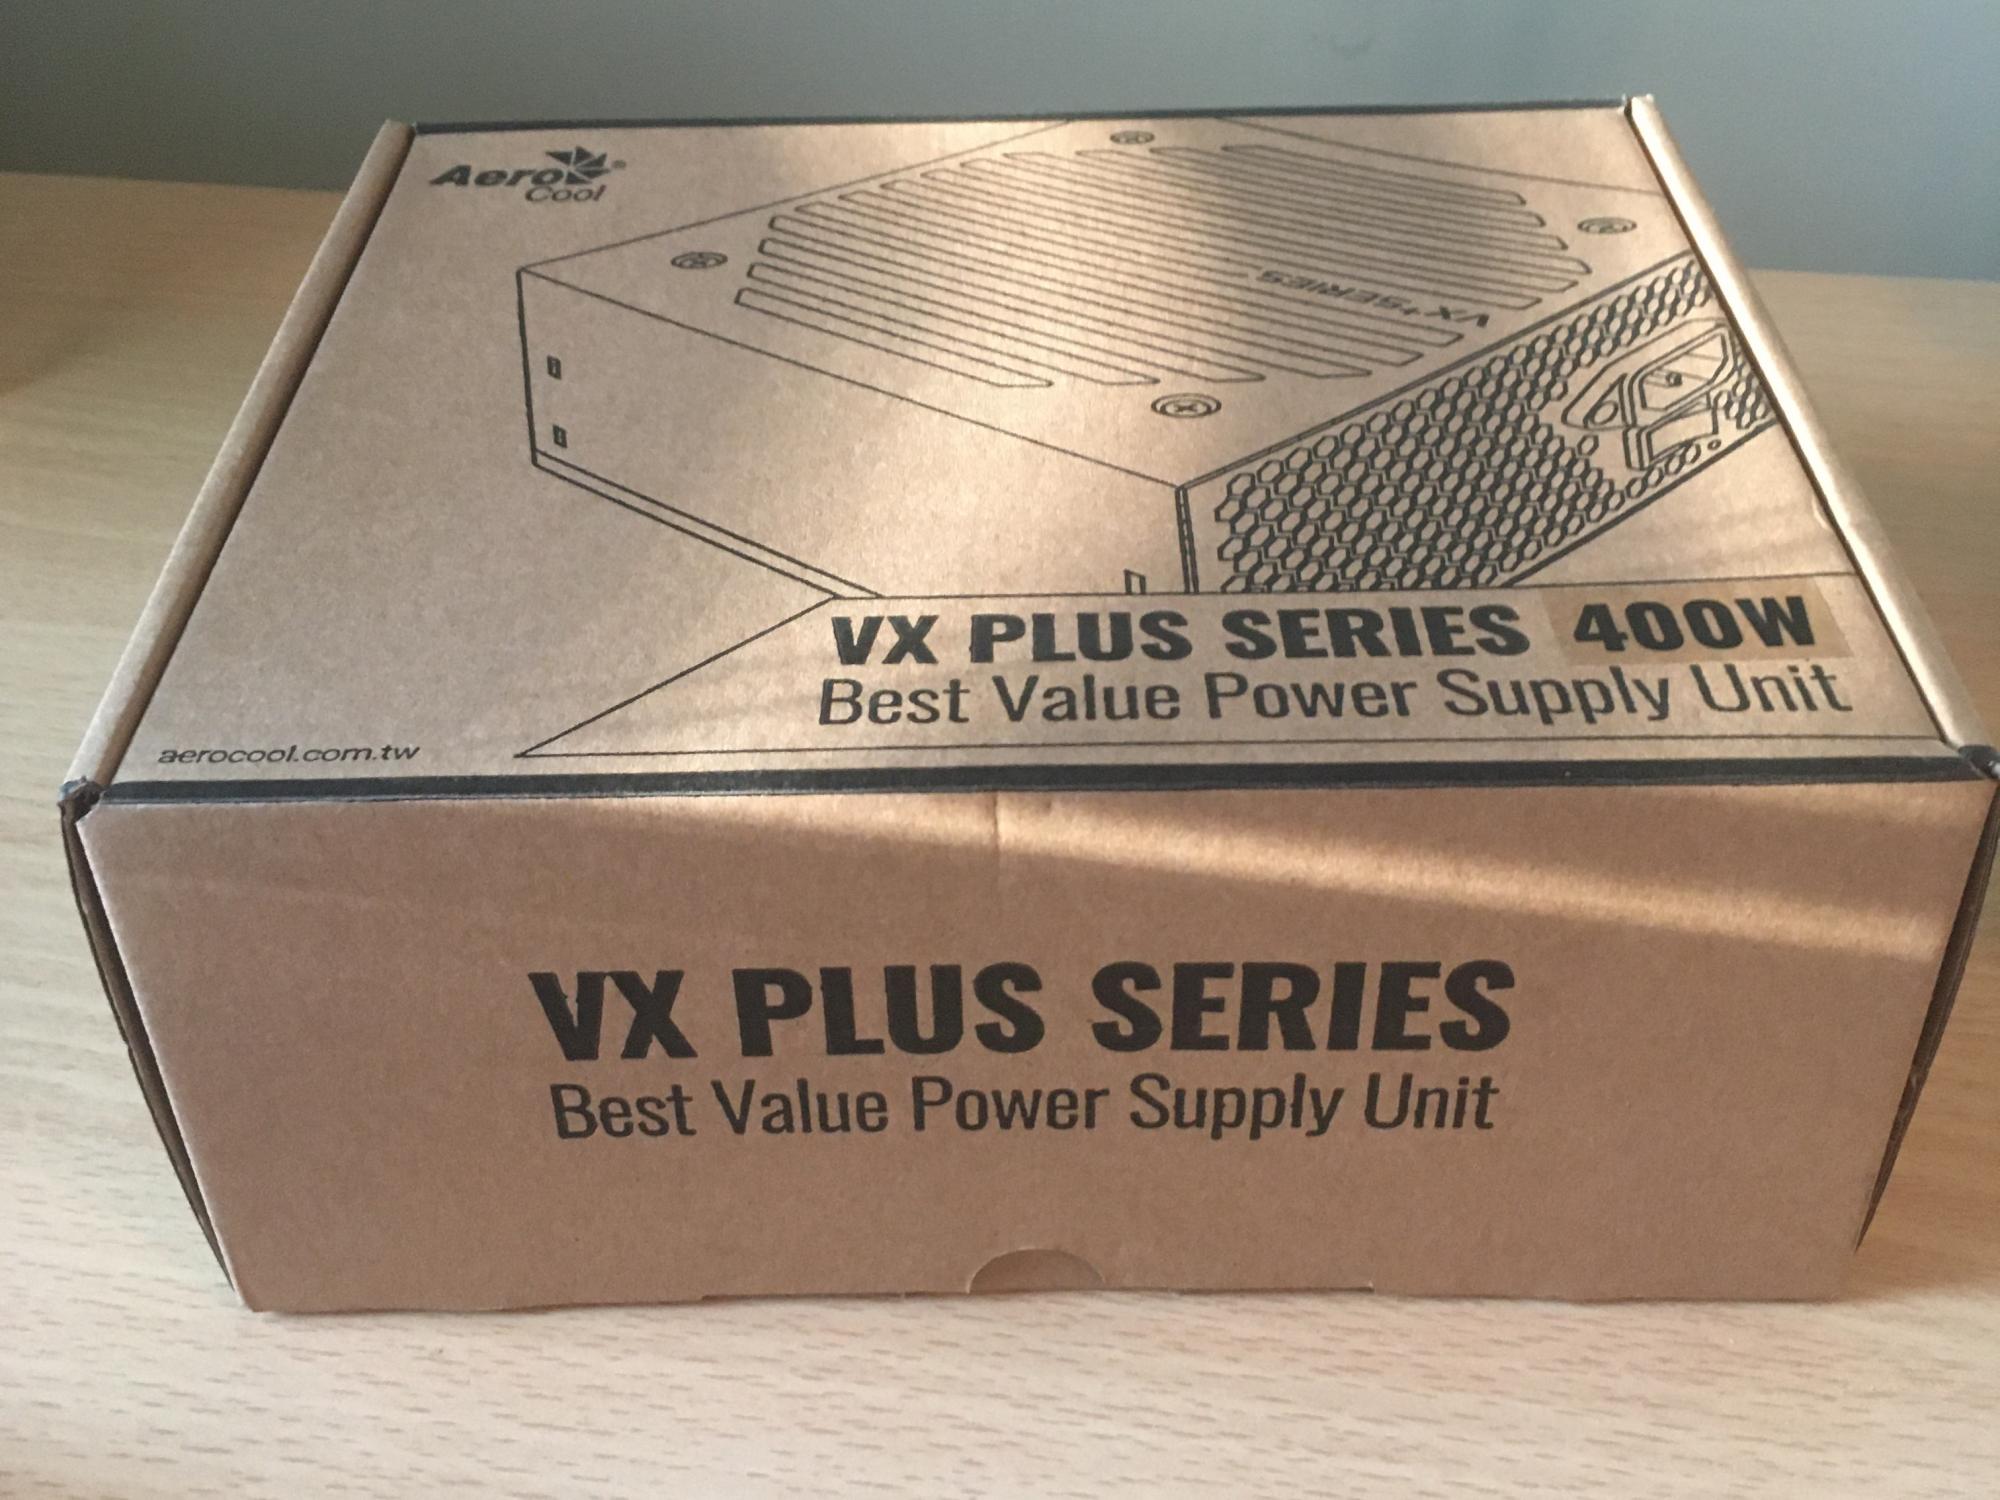 Vx plus series. VX Plus Series 400w. RB-s500hq7-0. Power Plus at Series Pack.